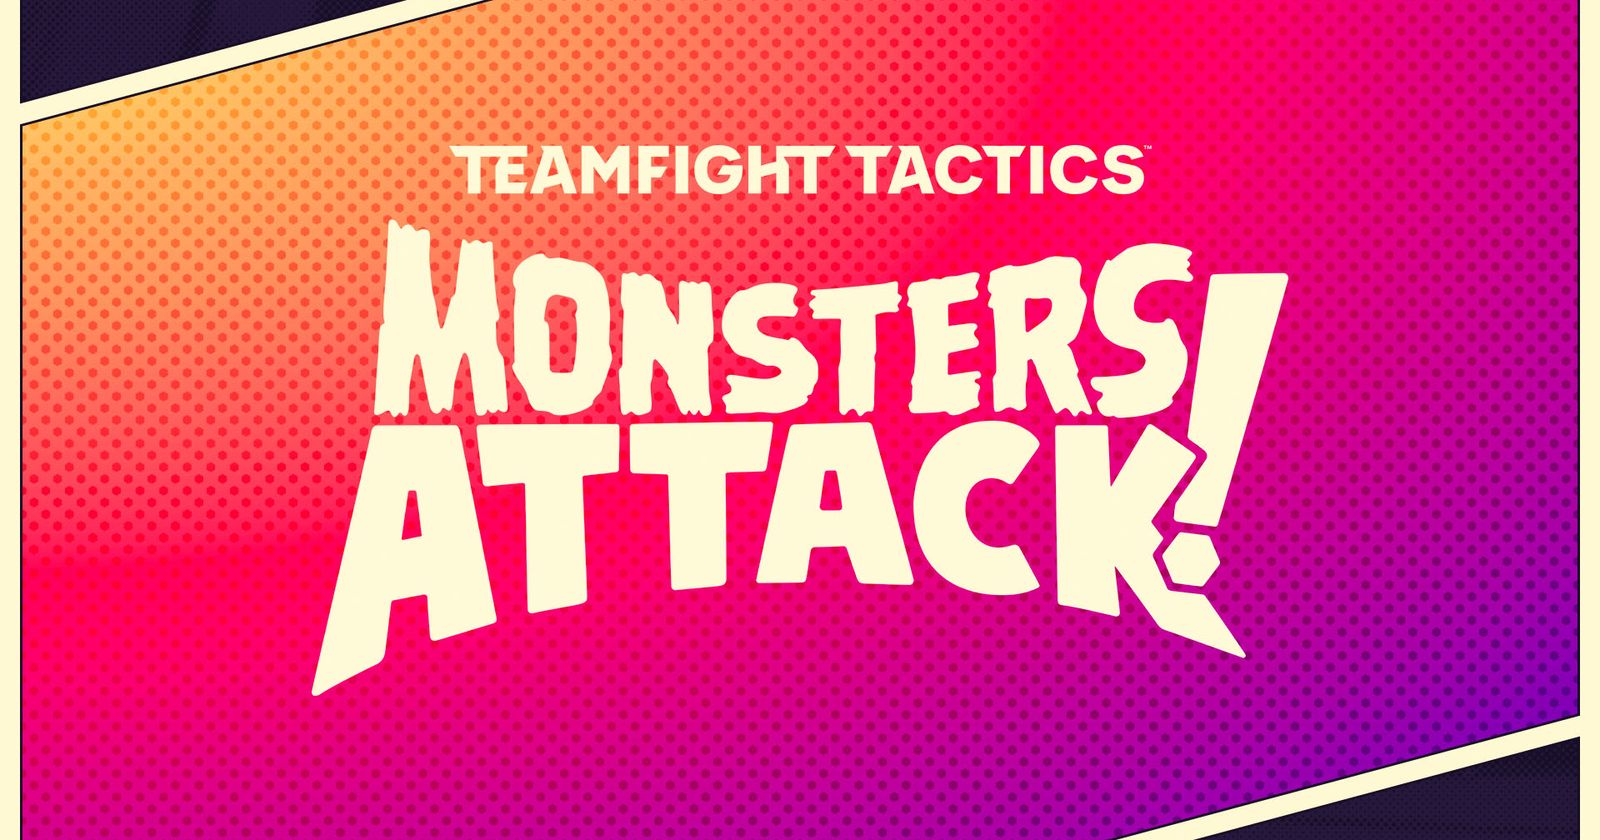 TFT: MONSTERS ATTACK! - Teamfight Tactics